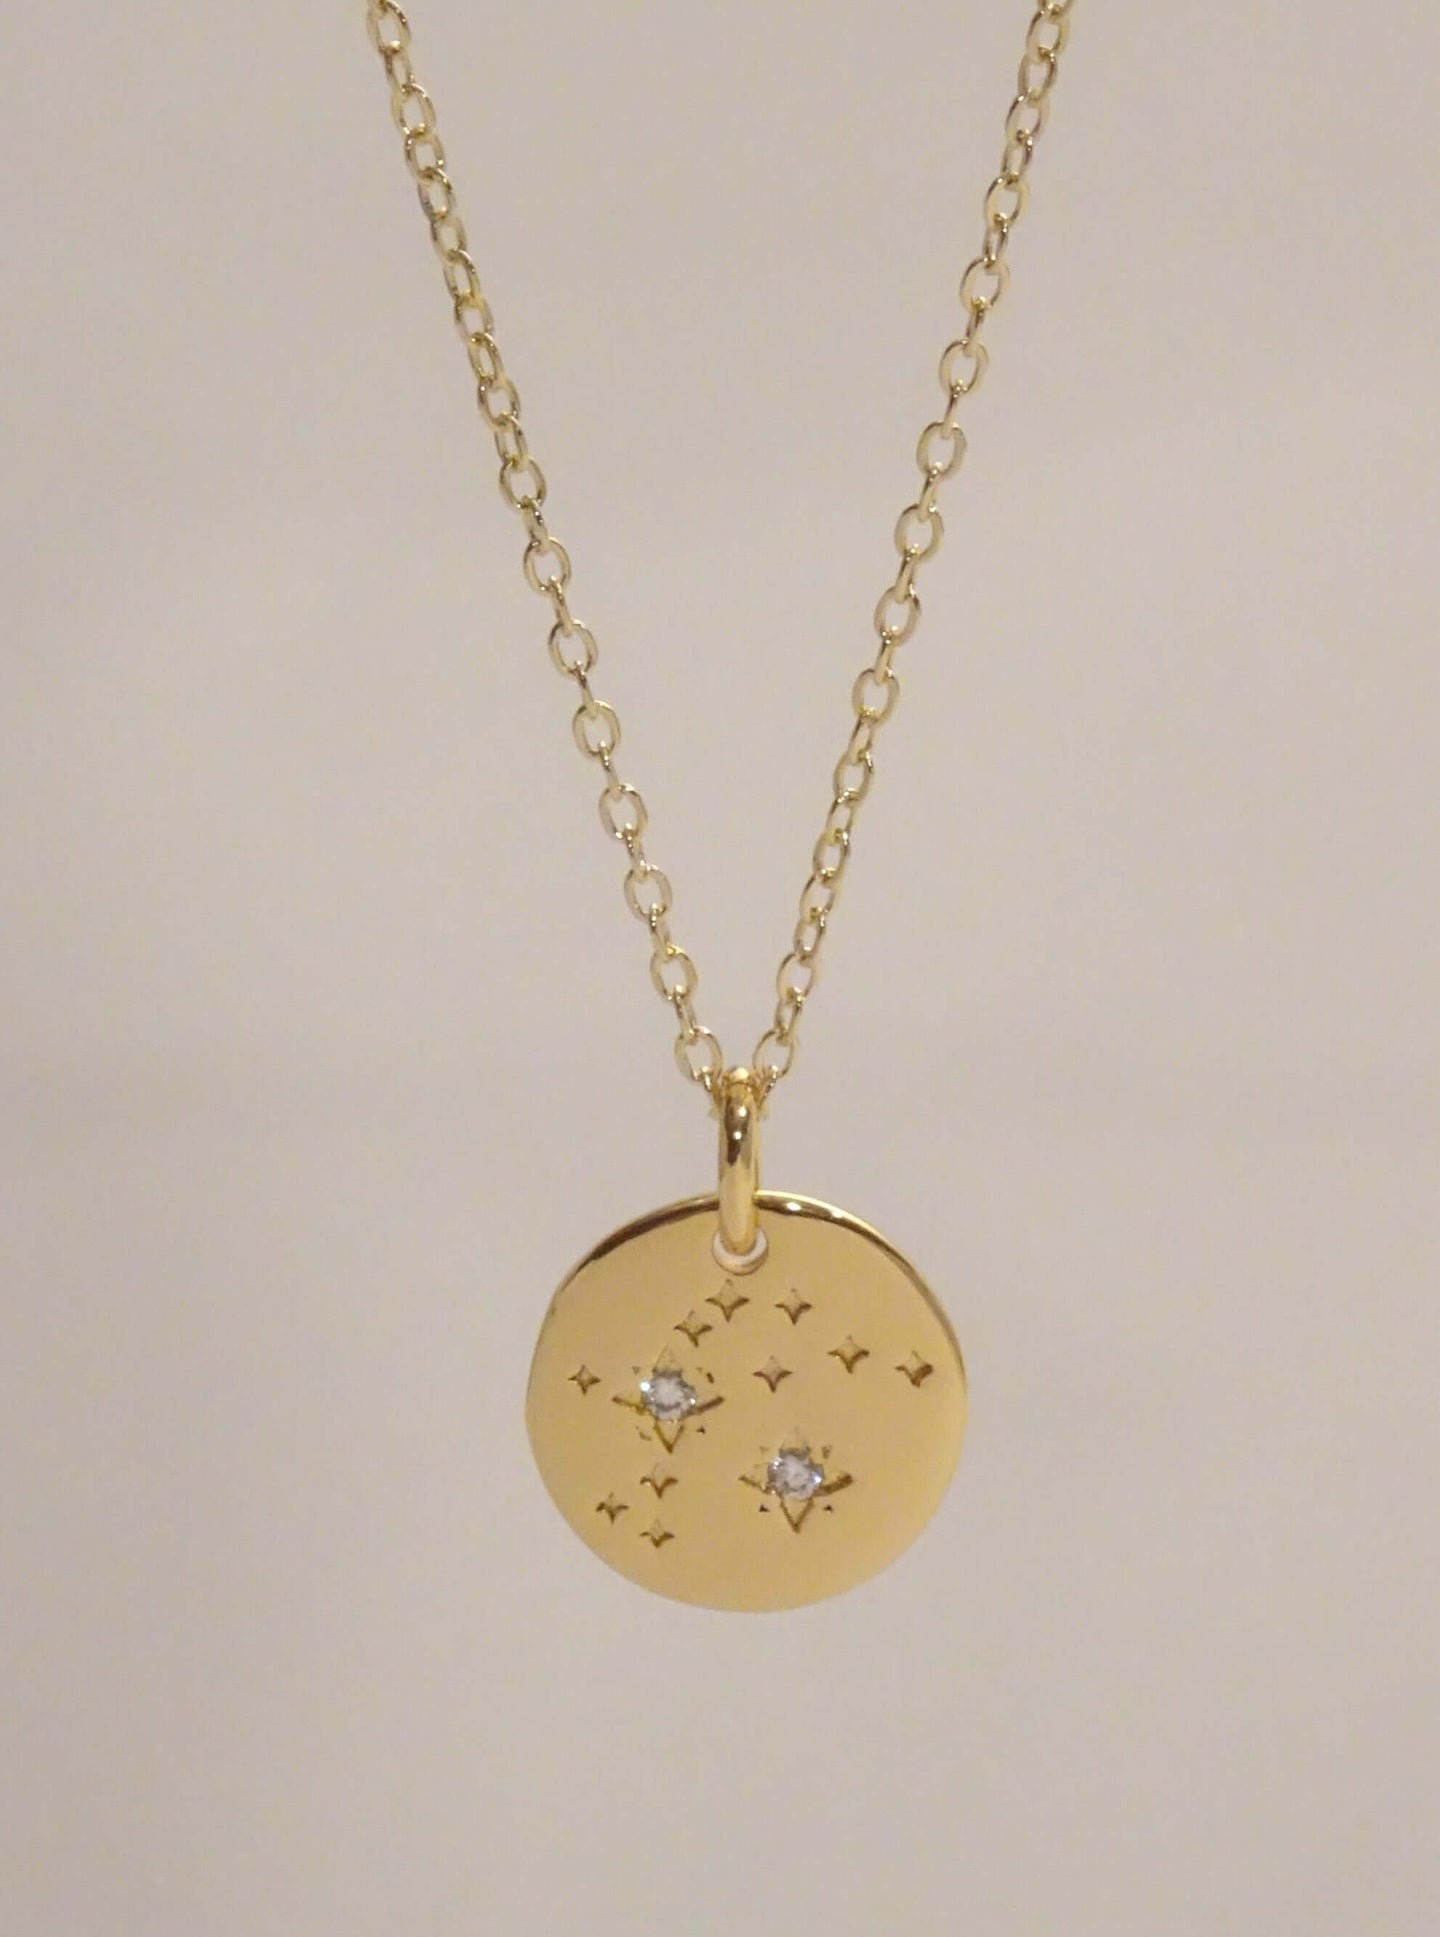 The Aquarius Constellation Coin Necklace | SPARROW